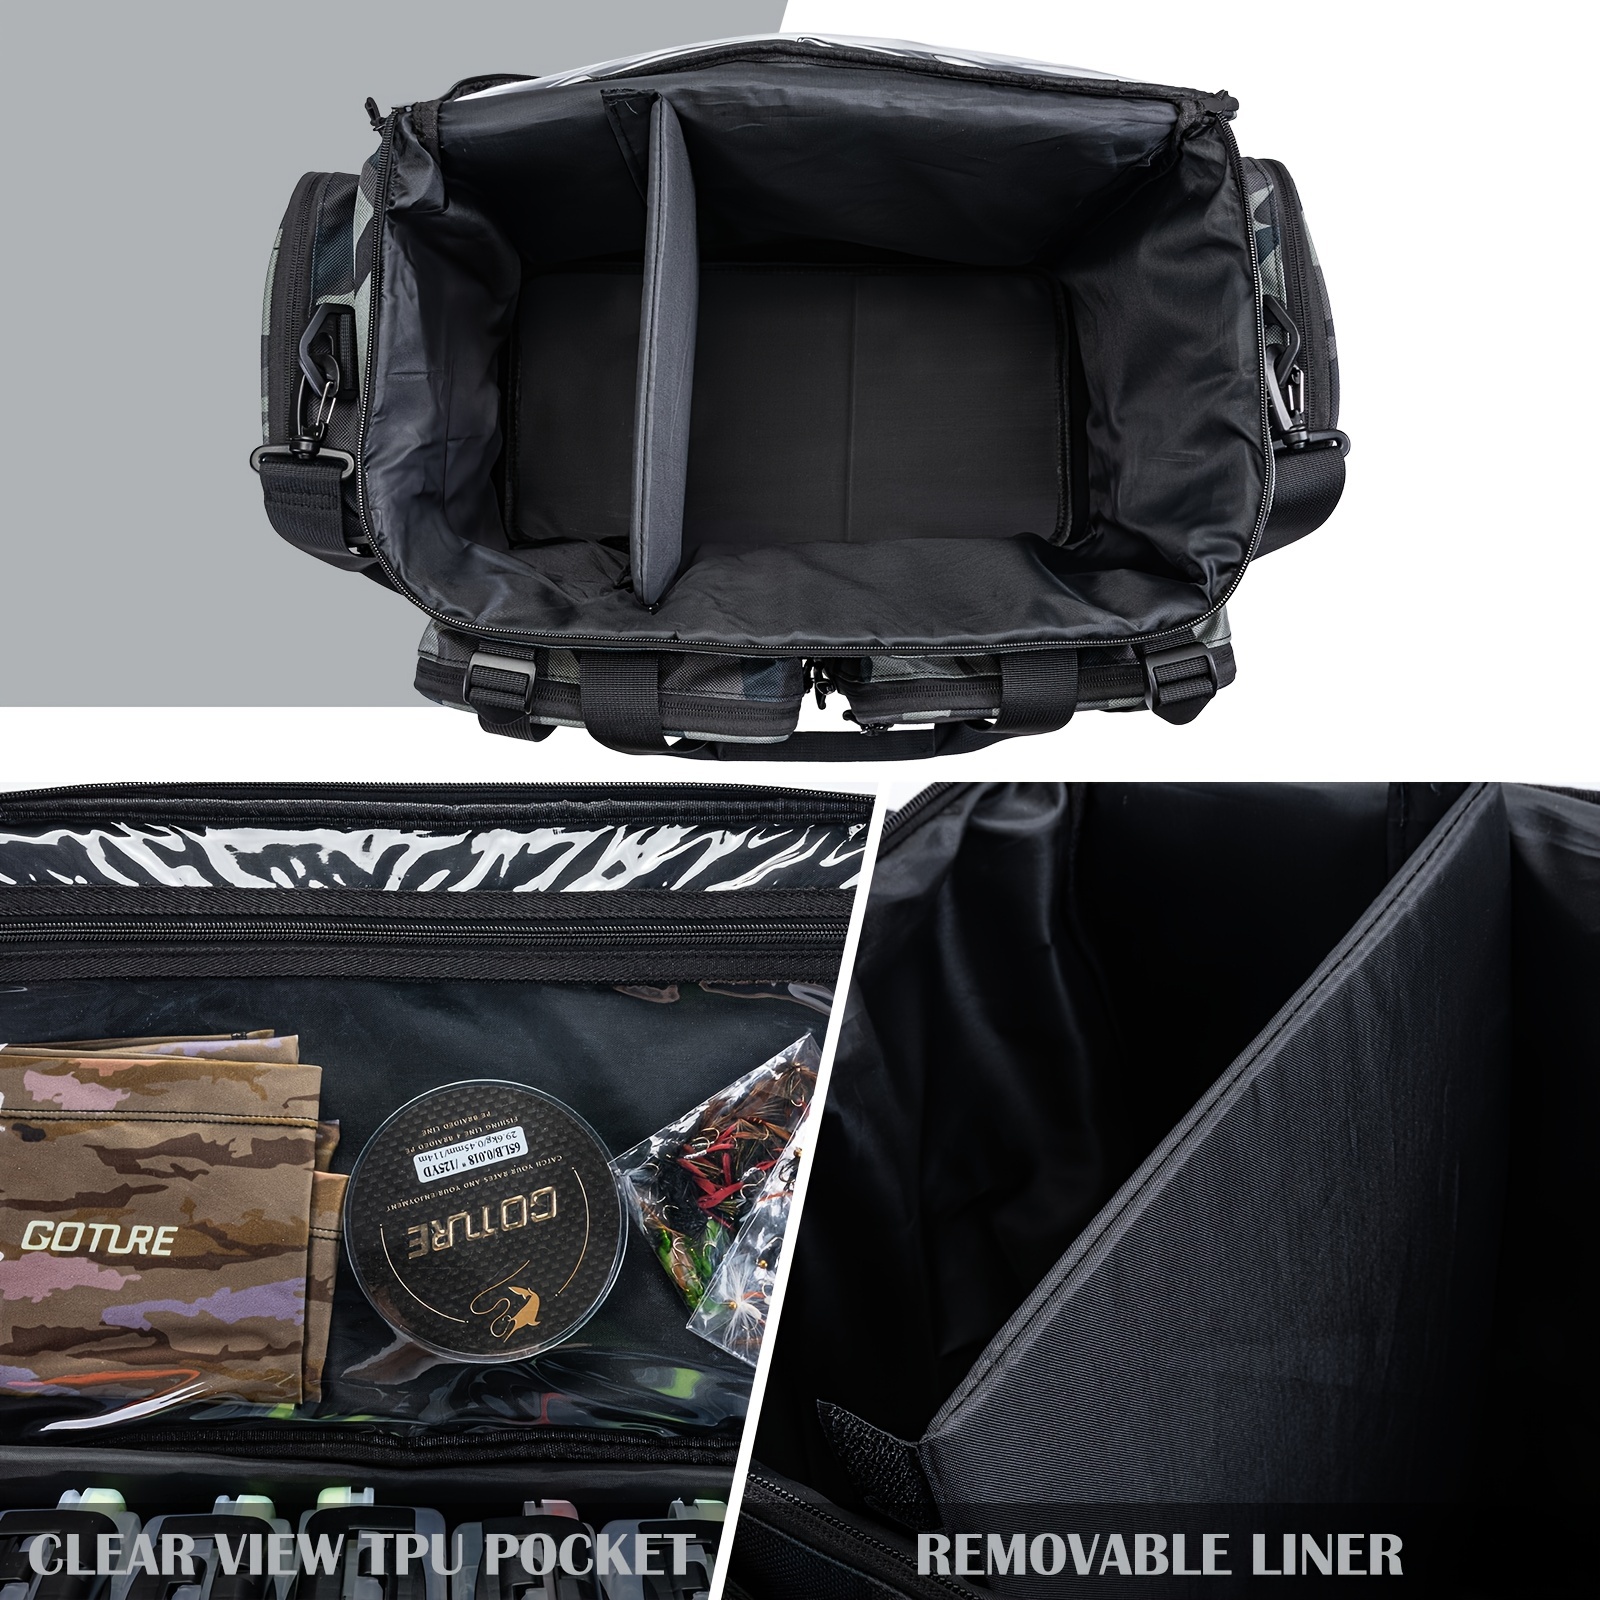 img.kwcdn.com/product/removable-liner-bag/d69d2f15